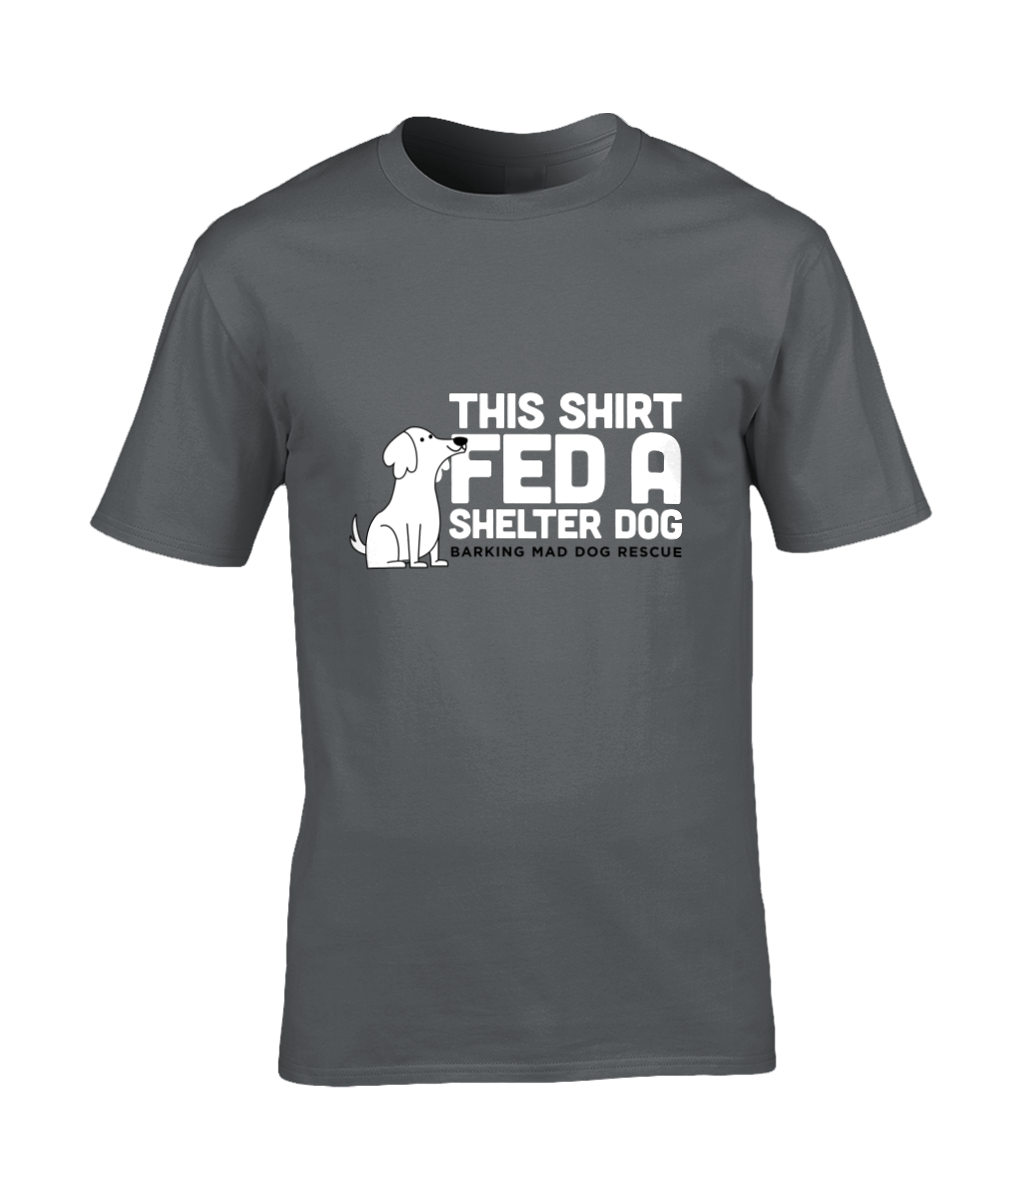 BMDR "This Shirt Fed a Shelter Dog" T-Shirt - Unisex